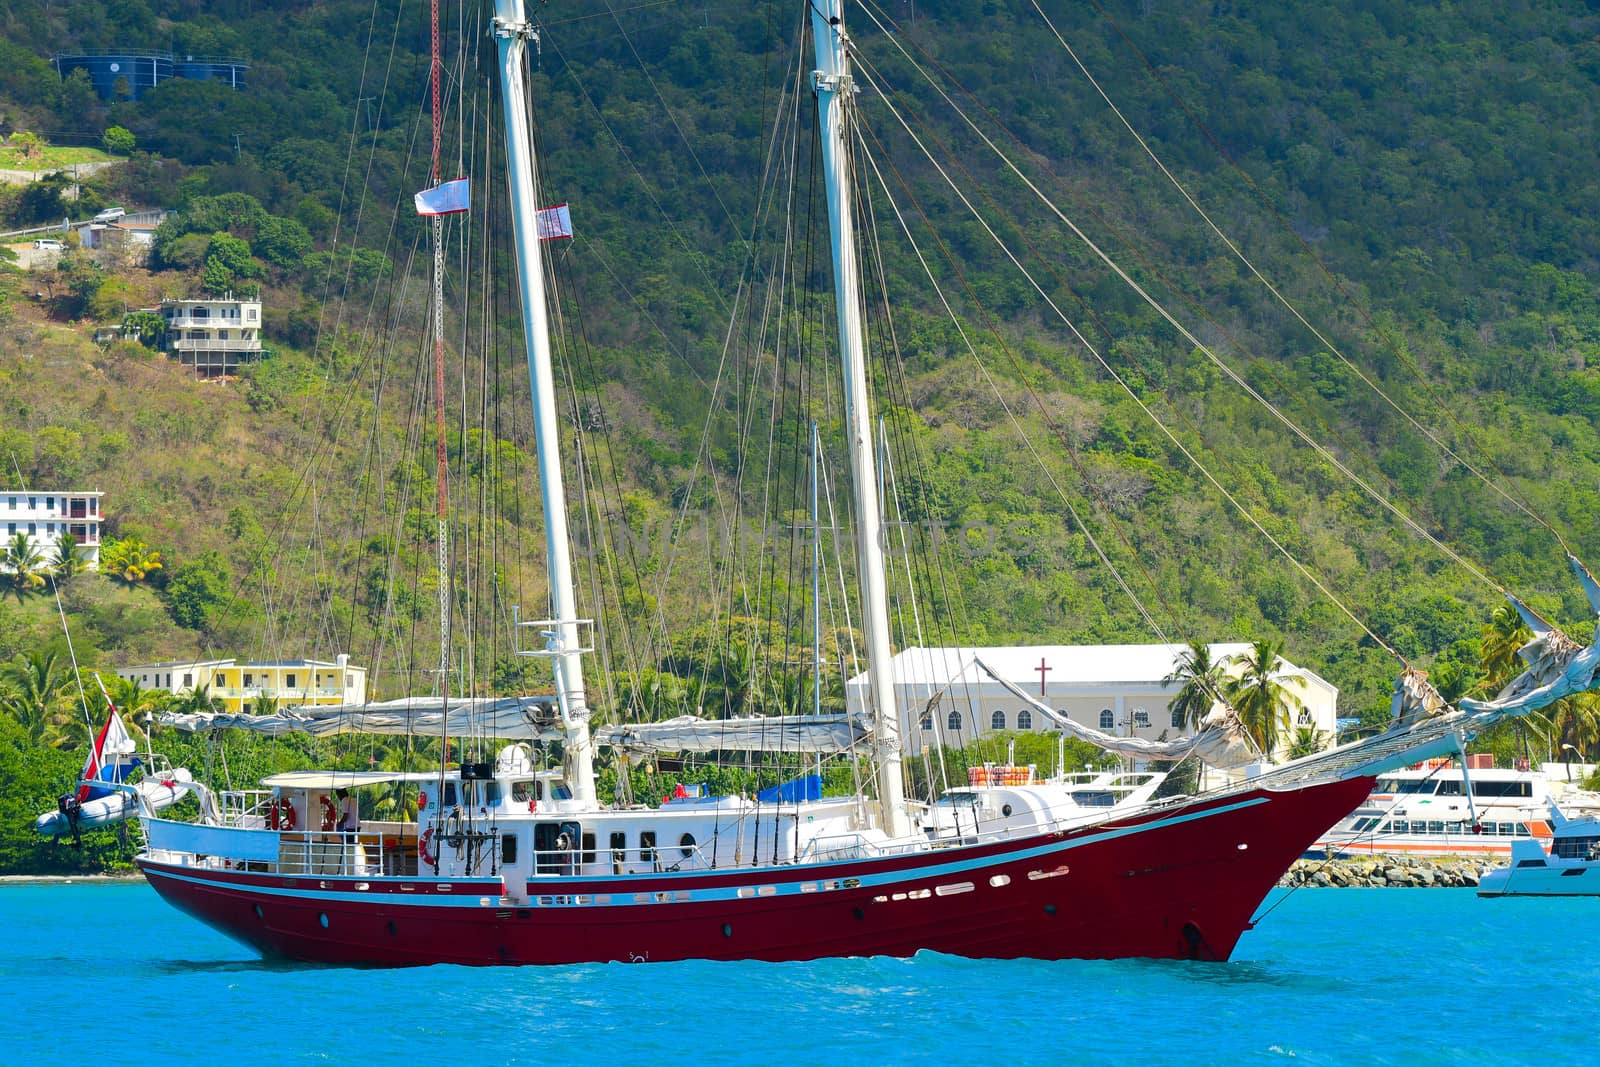 Large red sailing schooner at anchor in British Virgin Islands harbor.